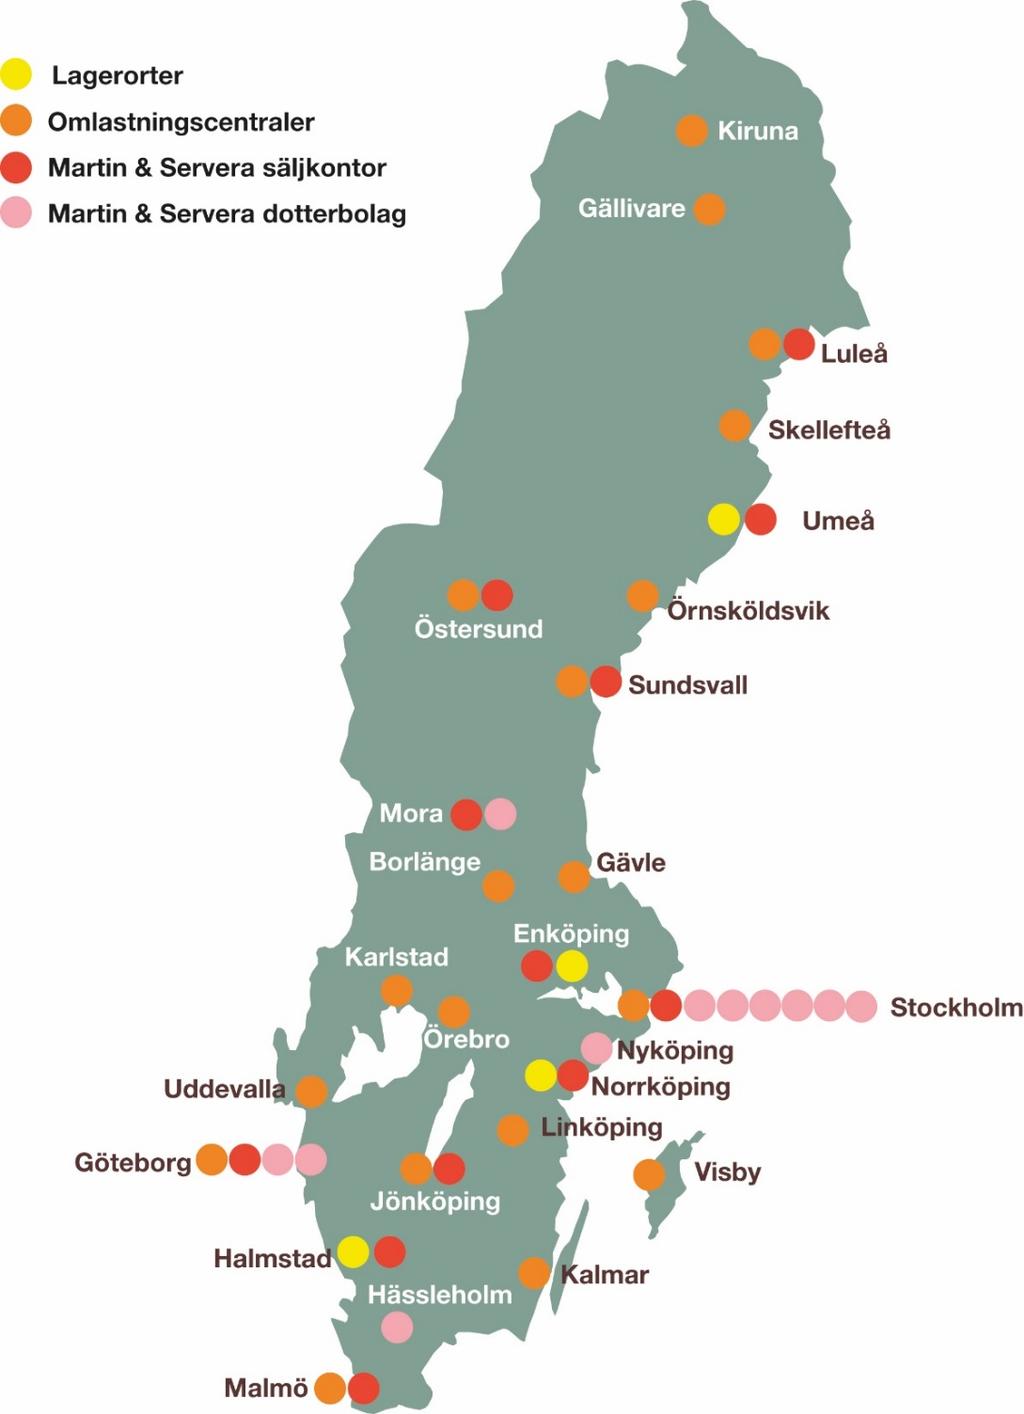 Effektiv logistik över hela Sverige Martin & Servera Restaurangdistribution: lager i Umeå,